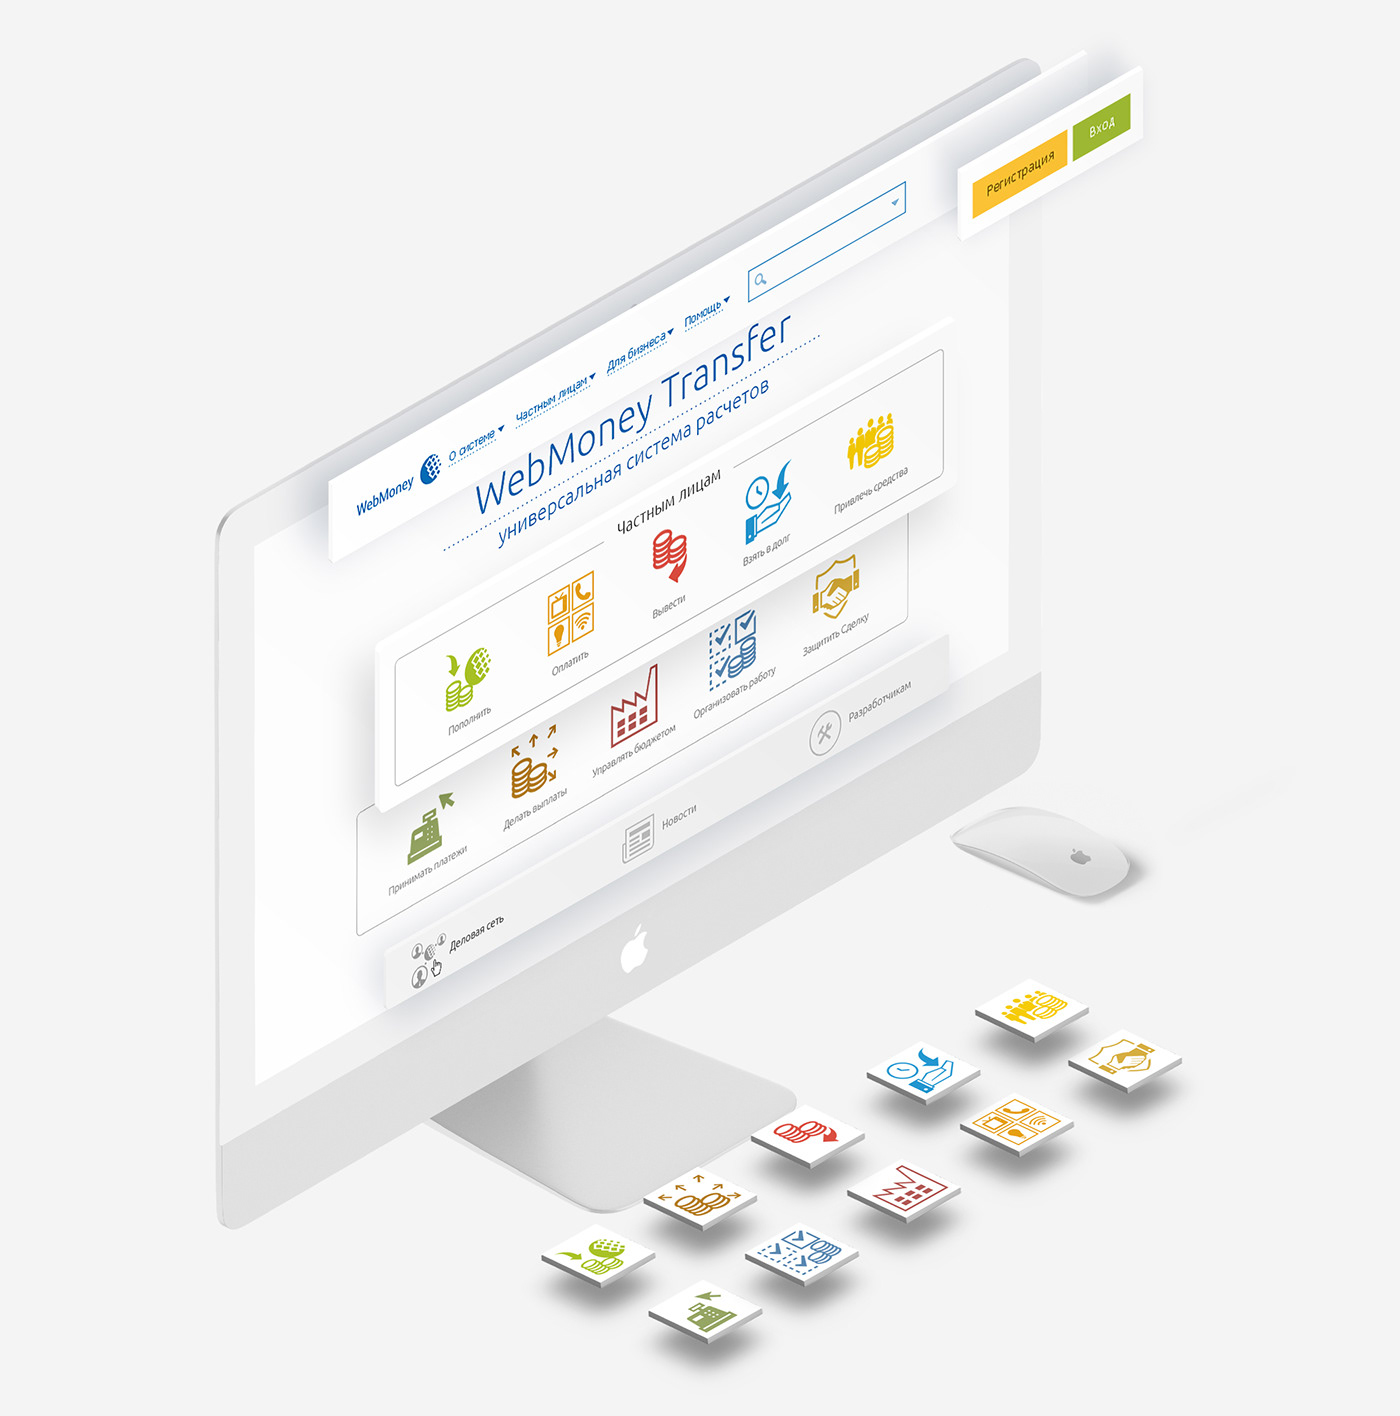 UI UIX Icon design re-design redesign Interface navigation homepage webmoney wmtransfer